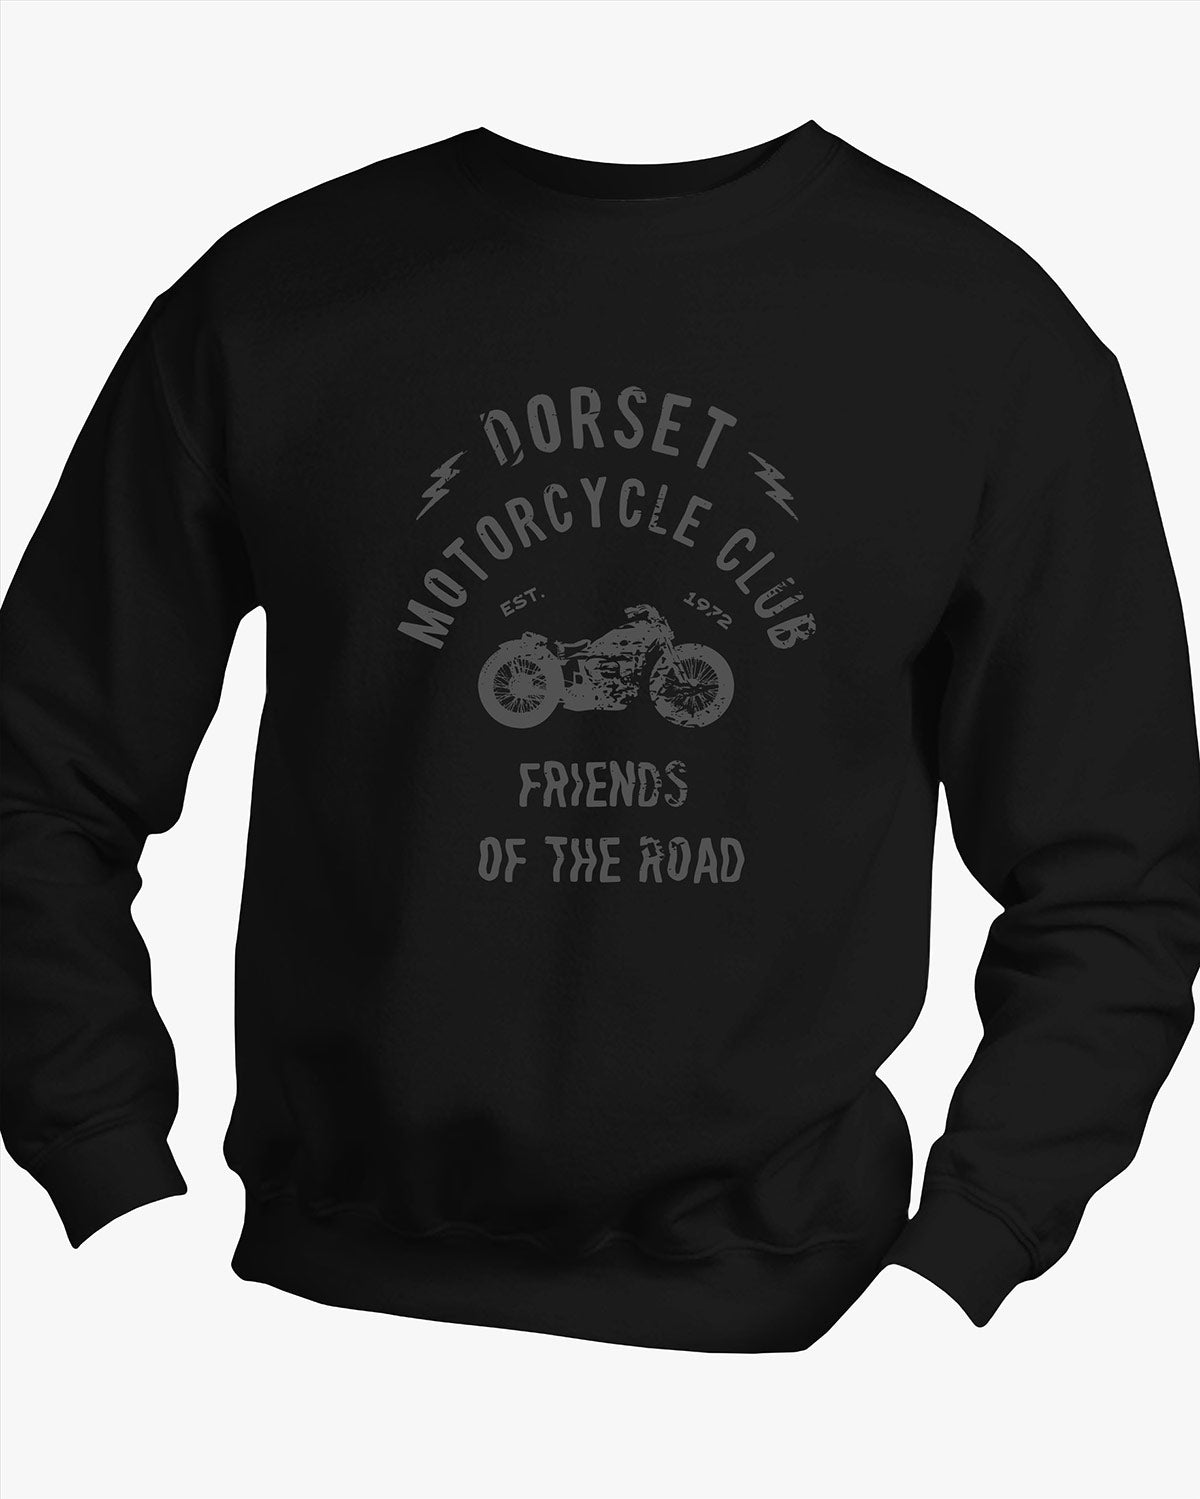 Motorcycle Club - Dorset - Sweater